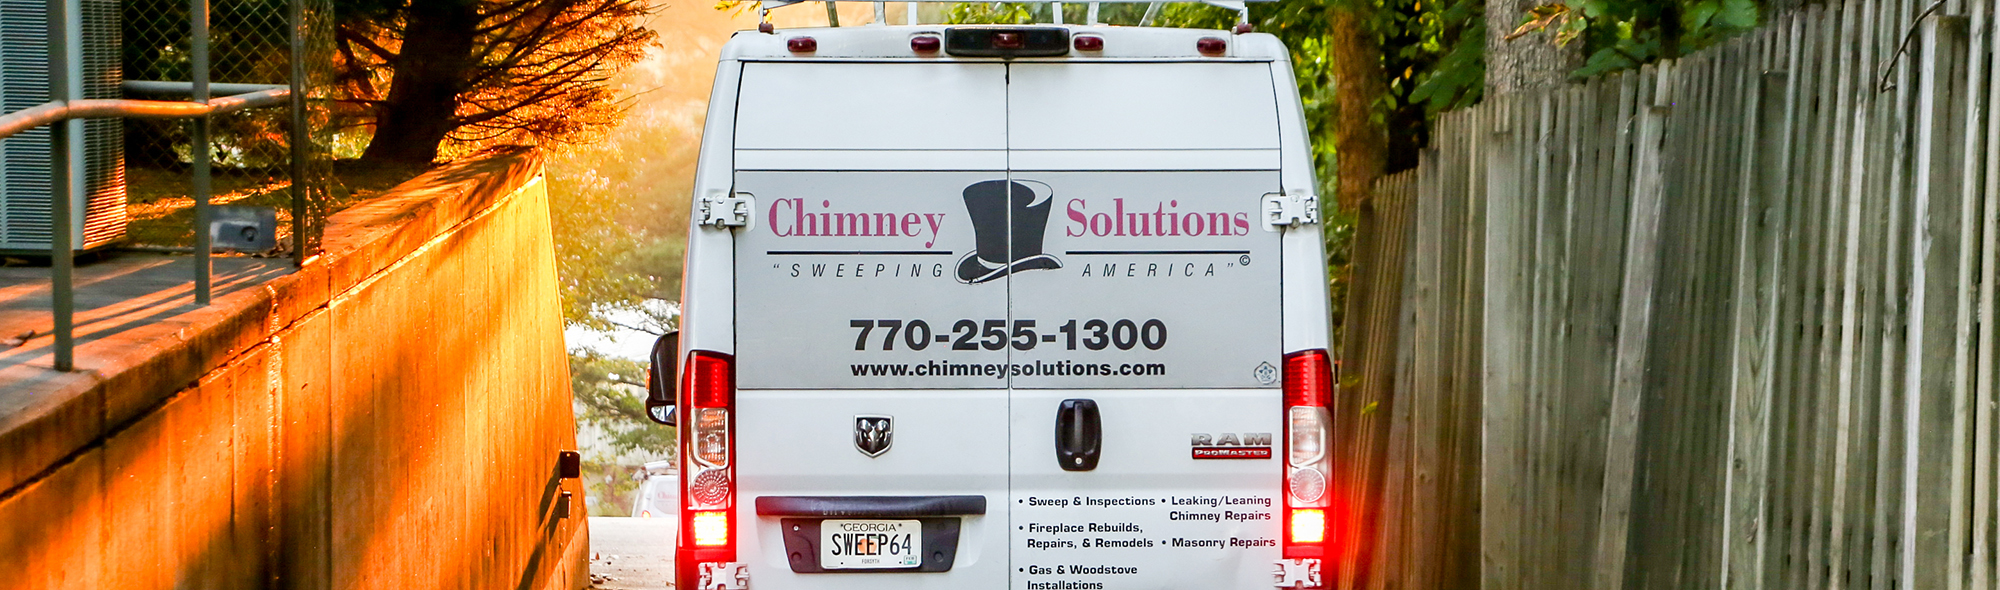 chimney service company in Fayetteville GA